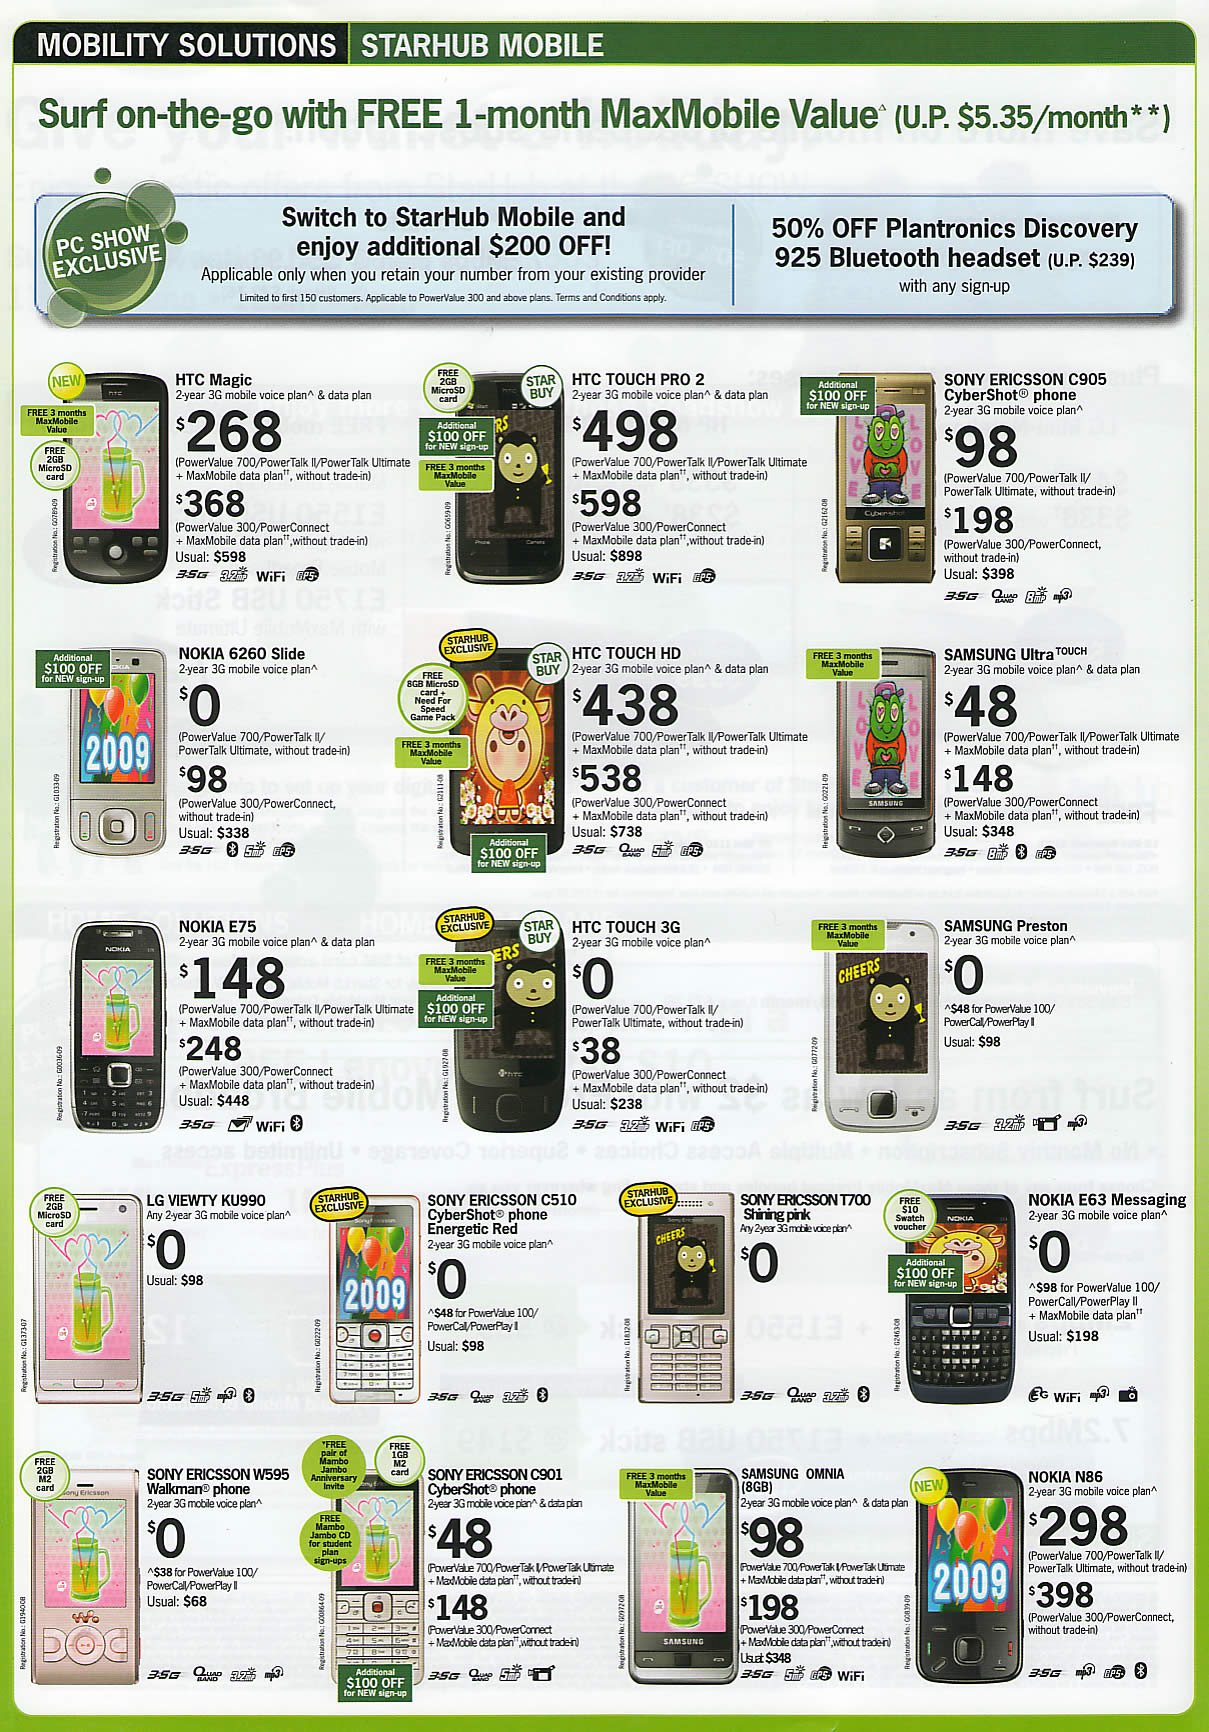 PC Show 2009 price list image brochure of Starhub Mobile Phones HTC Sony Ericsson Nokia Samsung LG